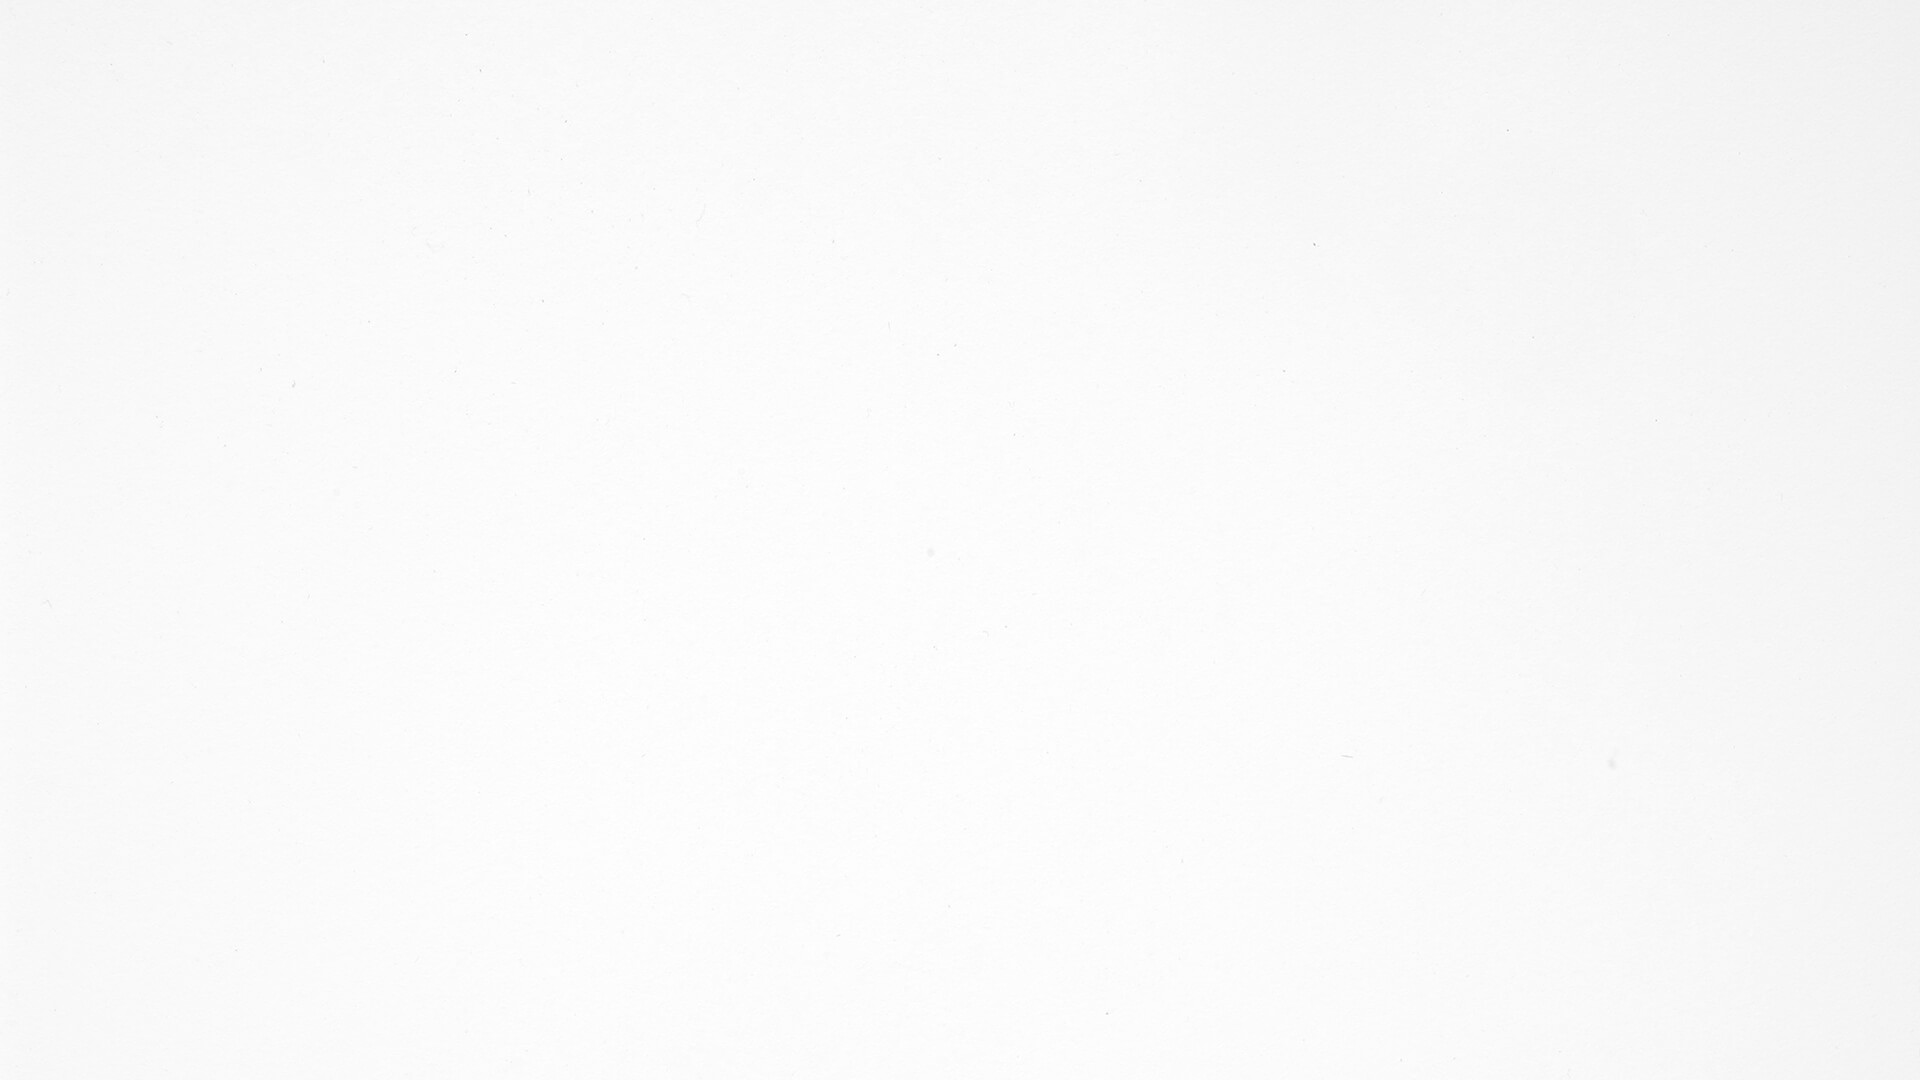 Vysokotlaký laminát Fénix  Arpa - HPLF FENIX 0032 NTM – dekor BIANCO KOS - JH jádro hnědé 